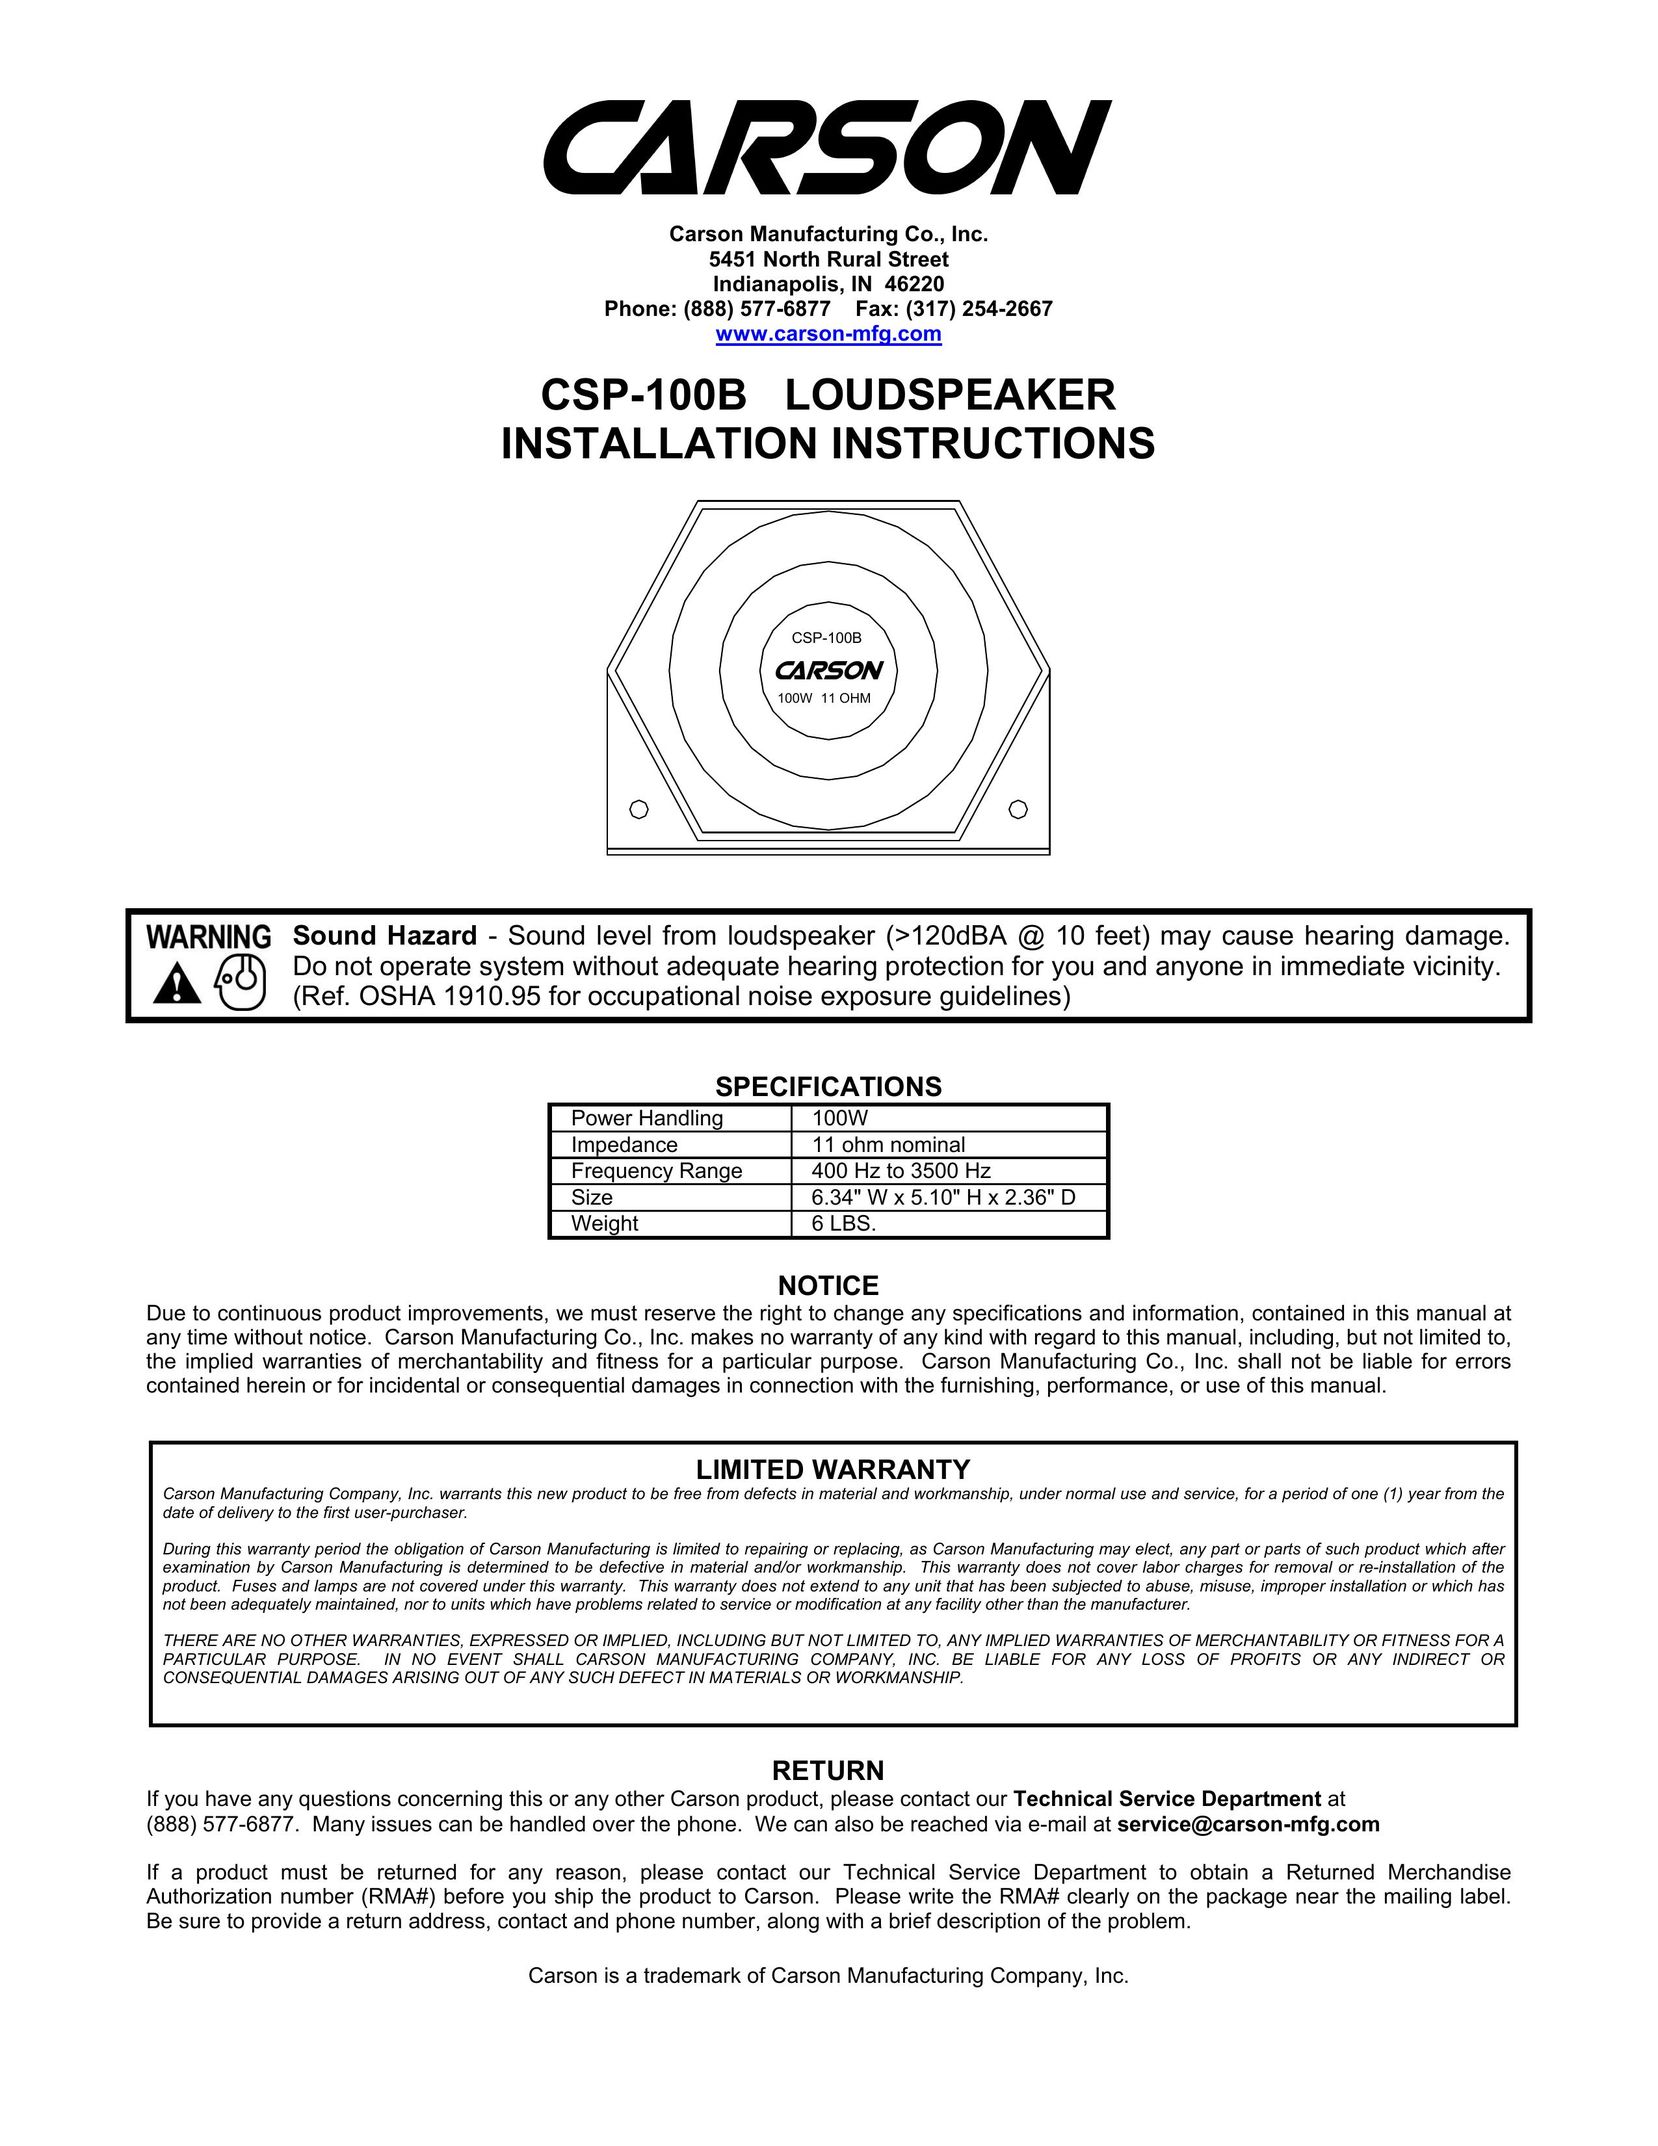 Carson CSP-100B Speaker User Manual